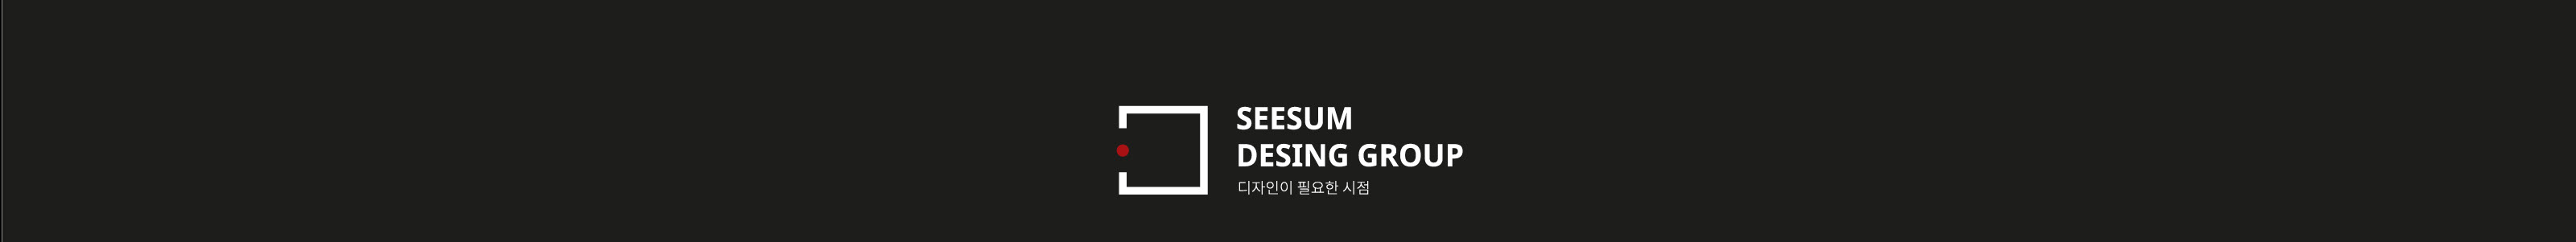 DESIGN SEESUM's profile banner